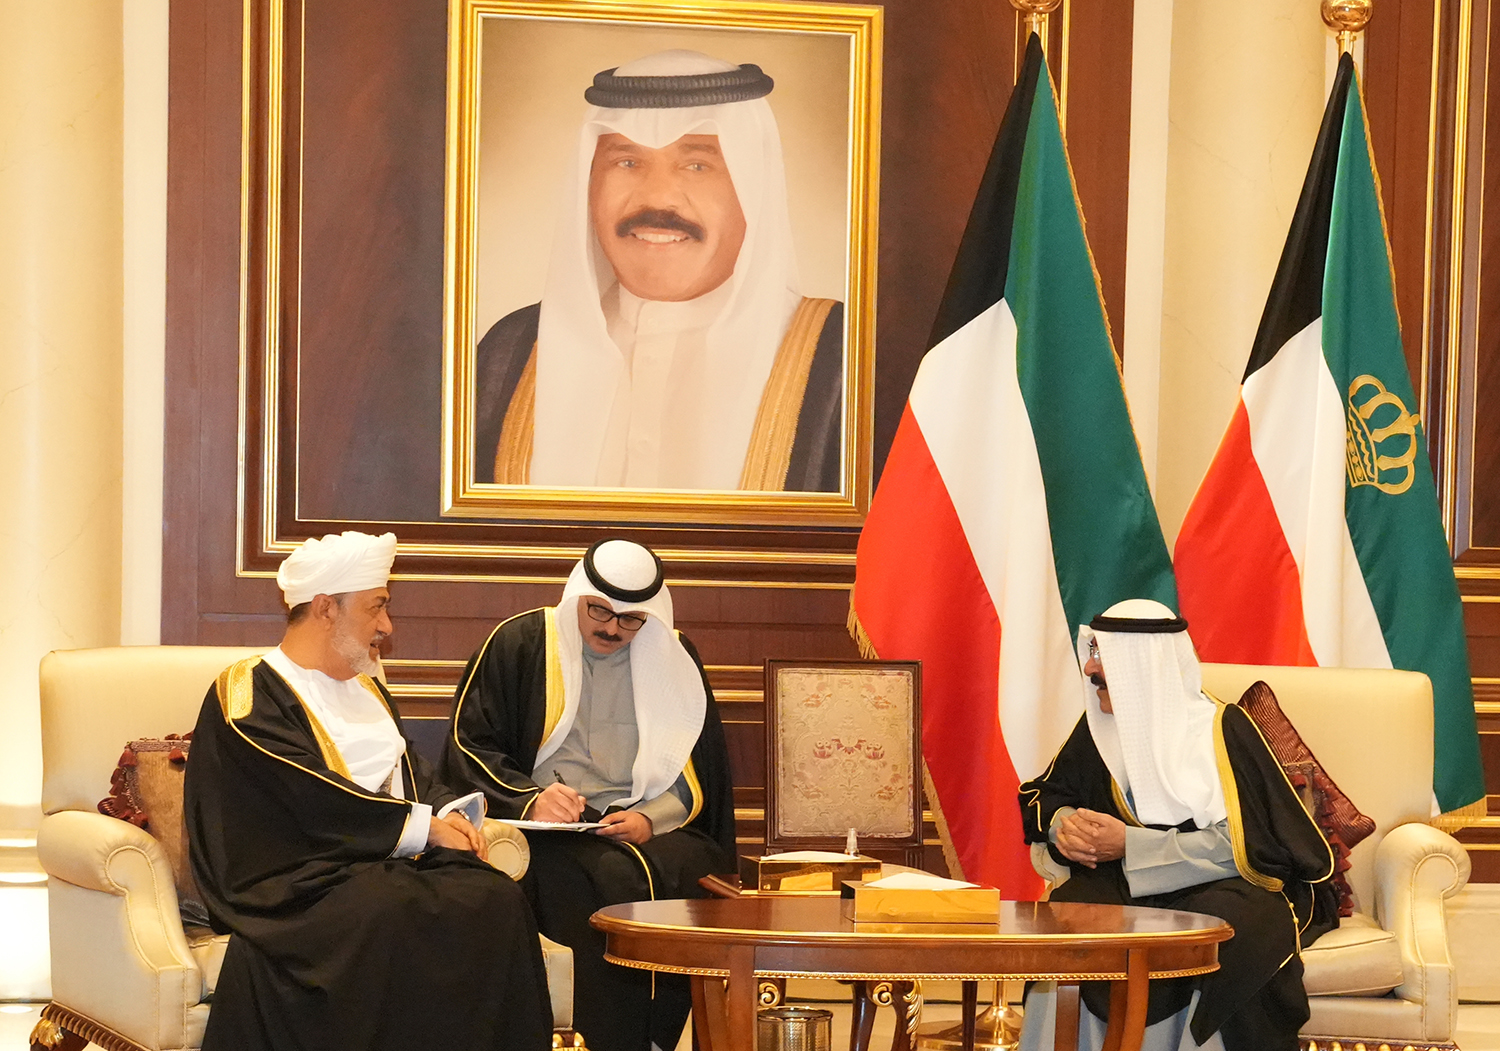 His Highness the Amir Sheikh Mishal Al-Ahmad Al-Jaber Al-Sabah received The Sultan of Oman Haitham bin Tarik